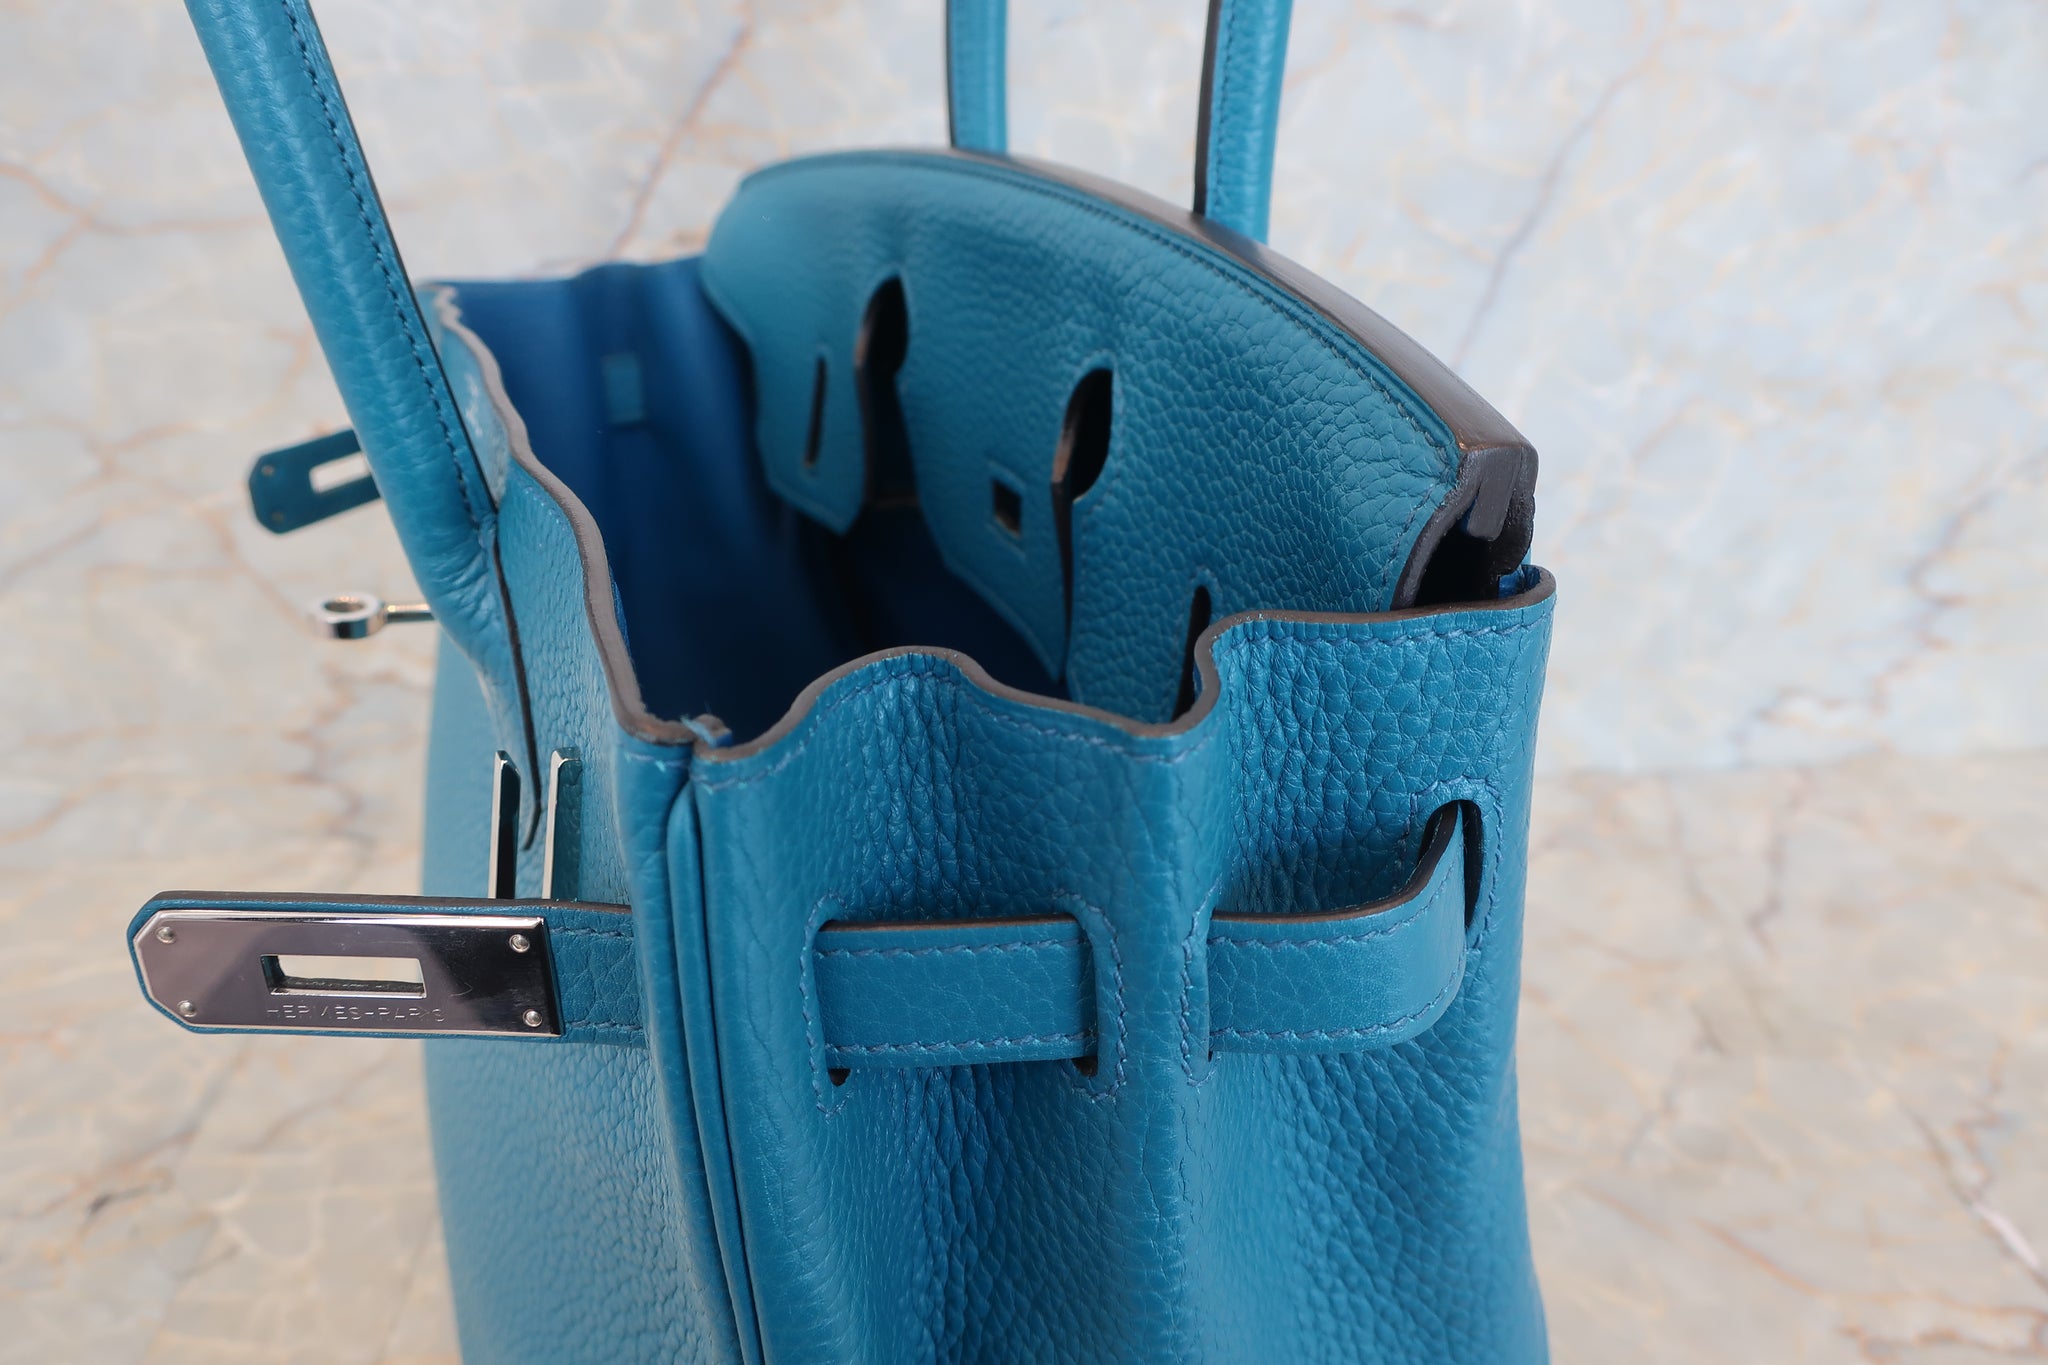 Hermes Birkin bag 30 Blue izmir Clemence leather Gold hardware